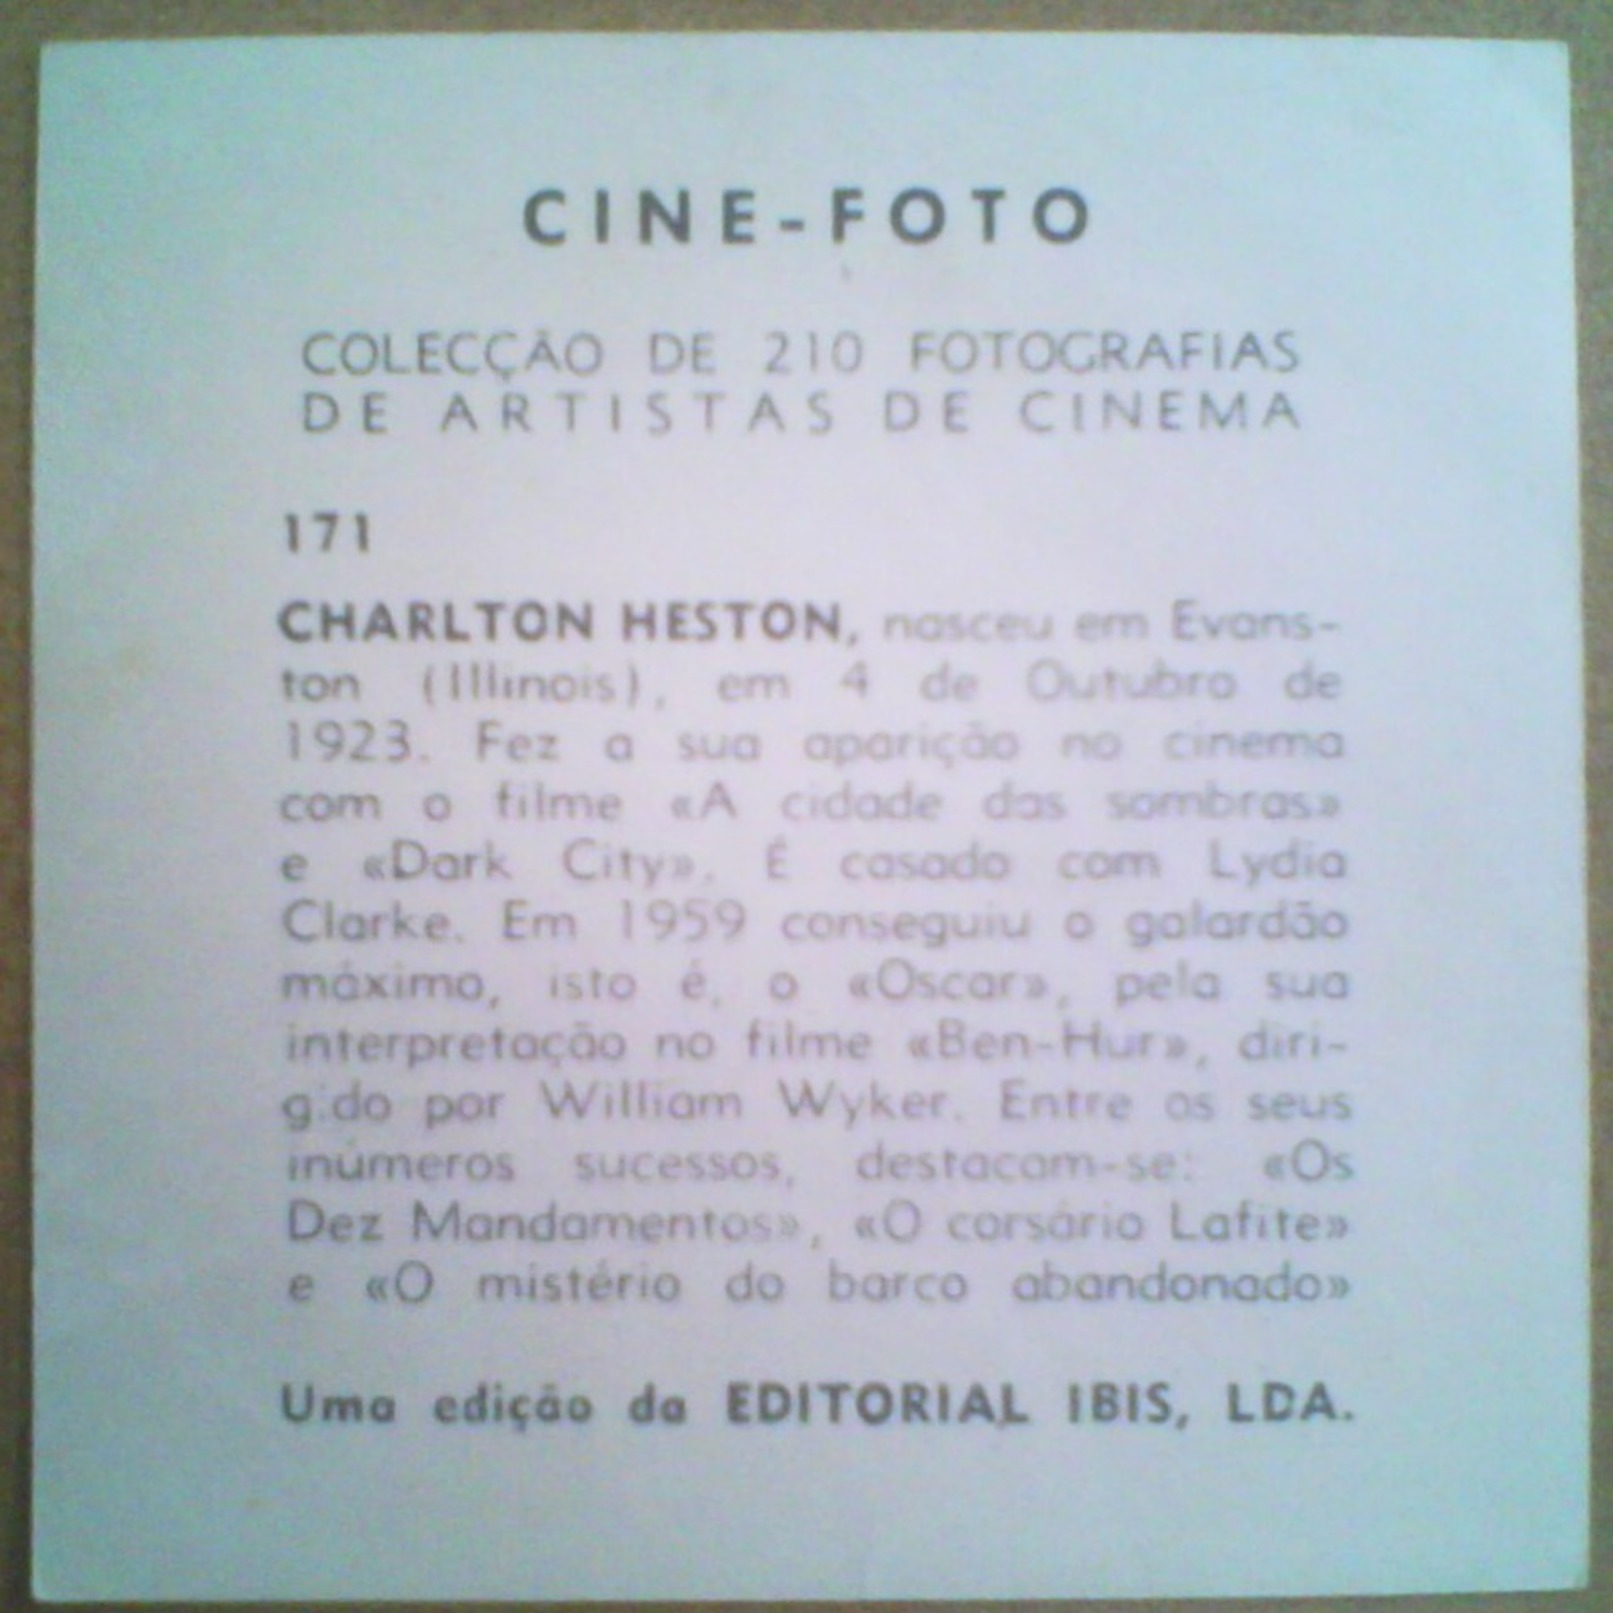 CINE-FOTO - MOVIE ARTISTS - CHARLTON HESTON - OLD PRINT PHOTO PICTURE CARD / CHROMO PORTUGAL 1960 CINEMA FILM STARS - Collections